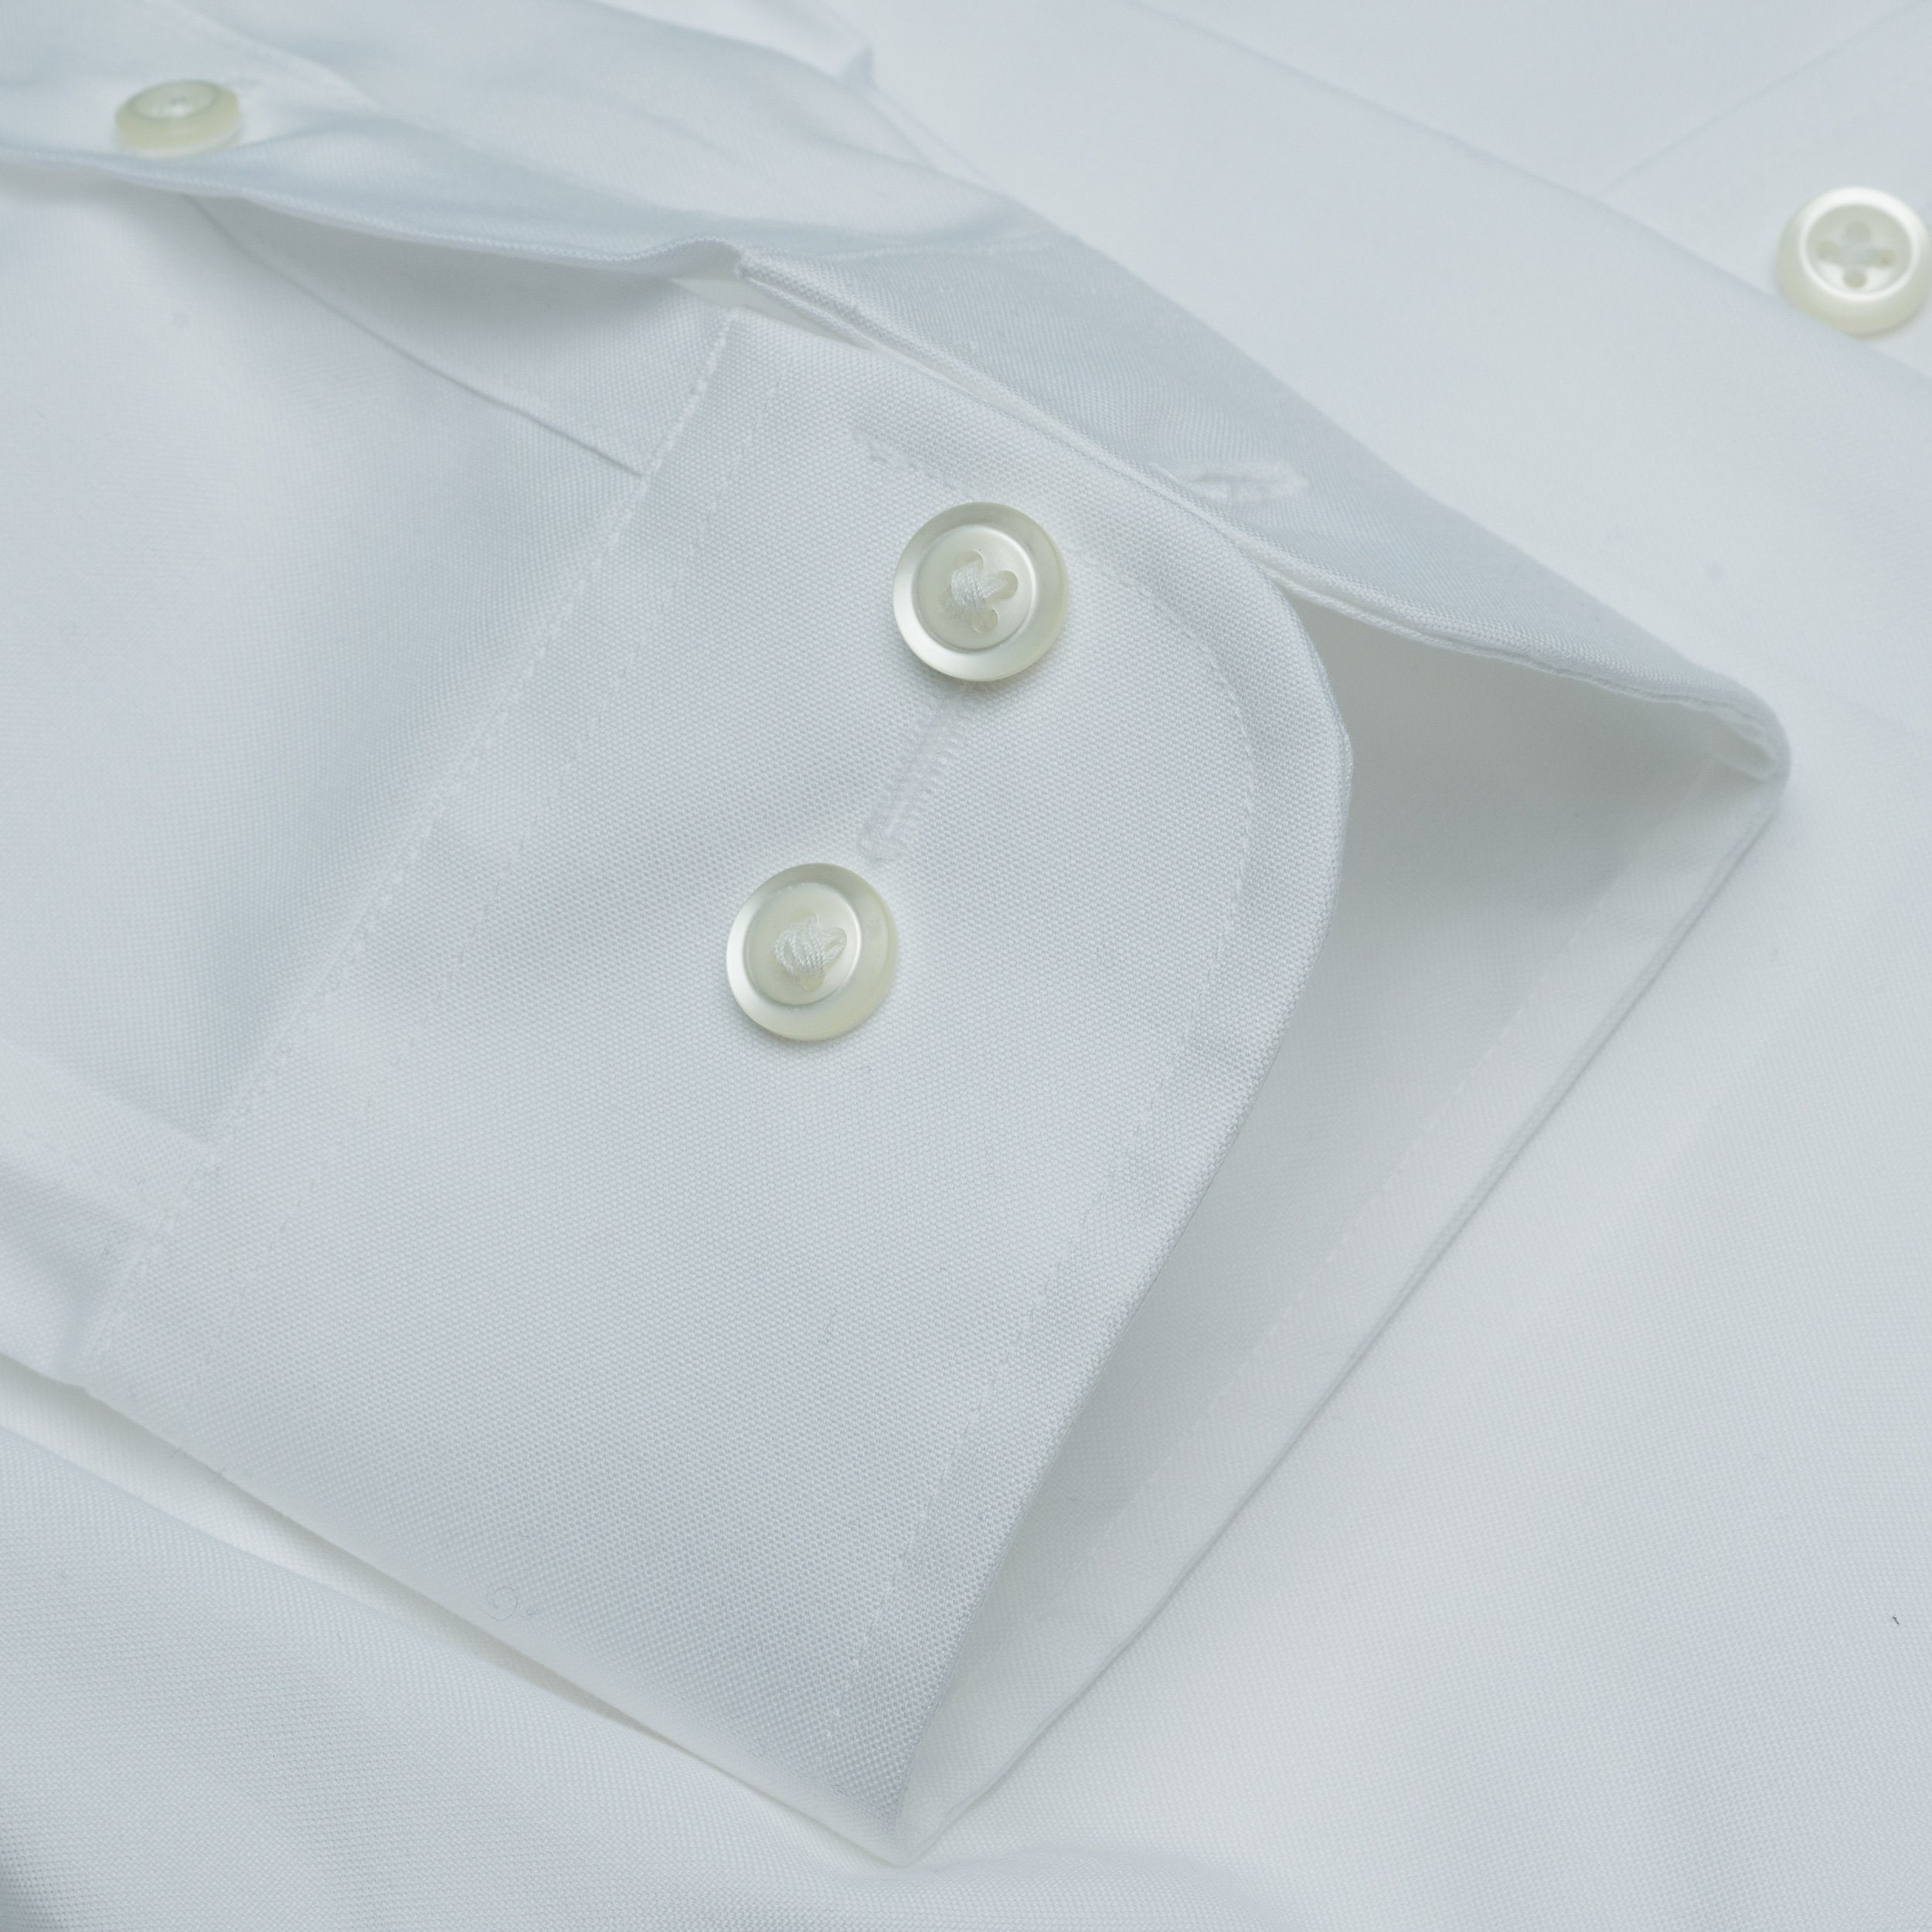 001 White-Button Down-Tailor Fit Best Dress Shirt 